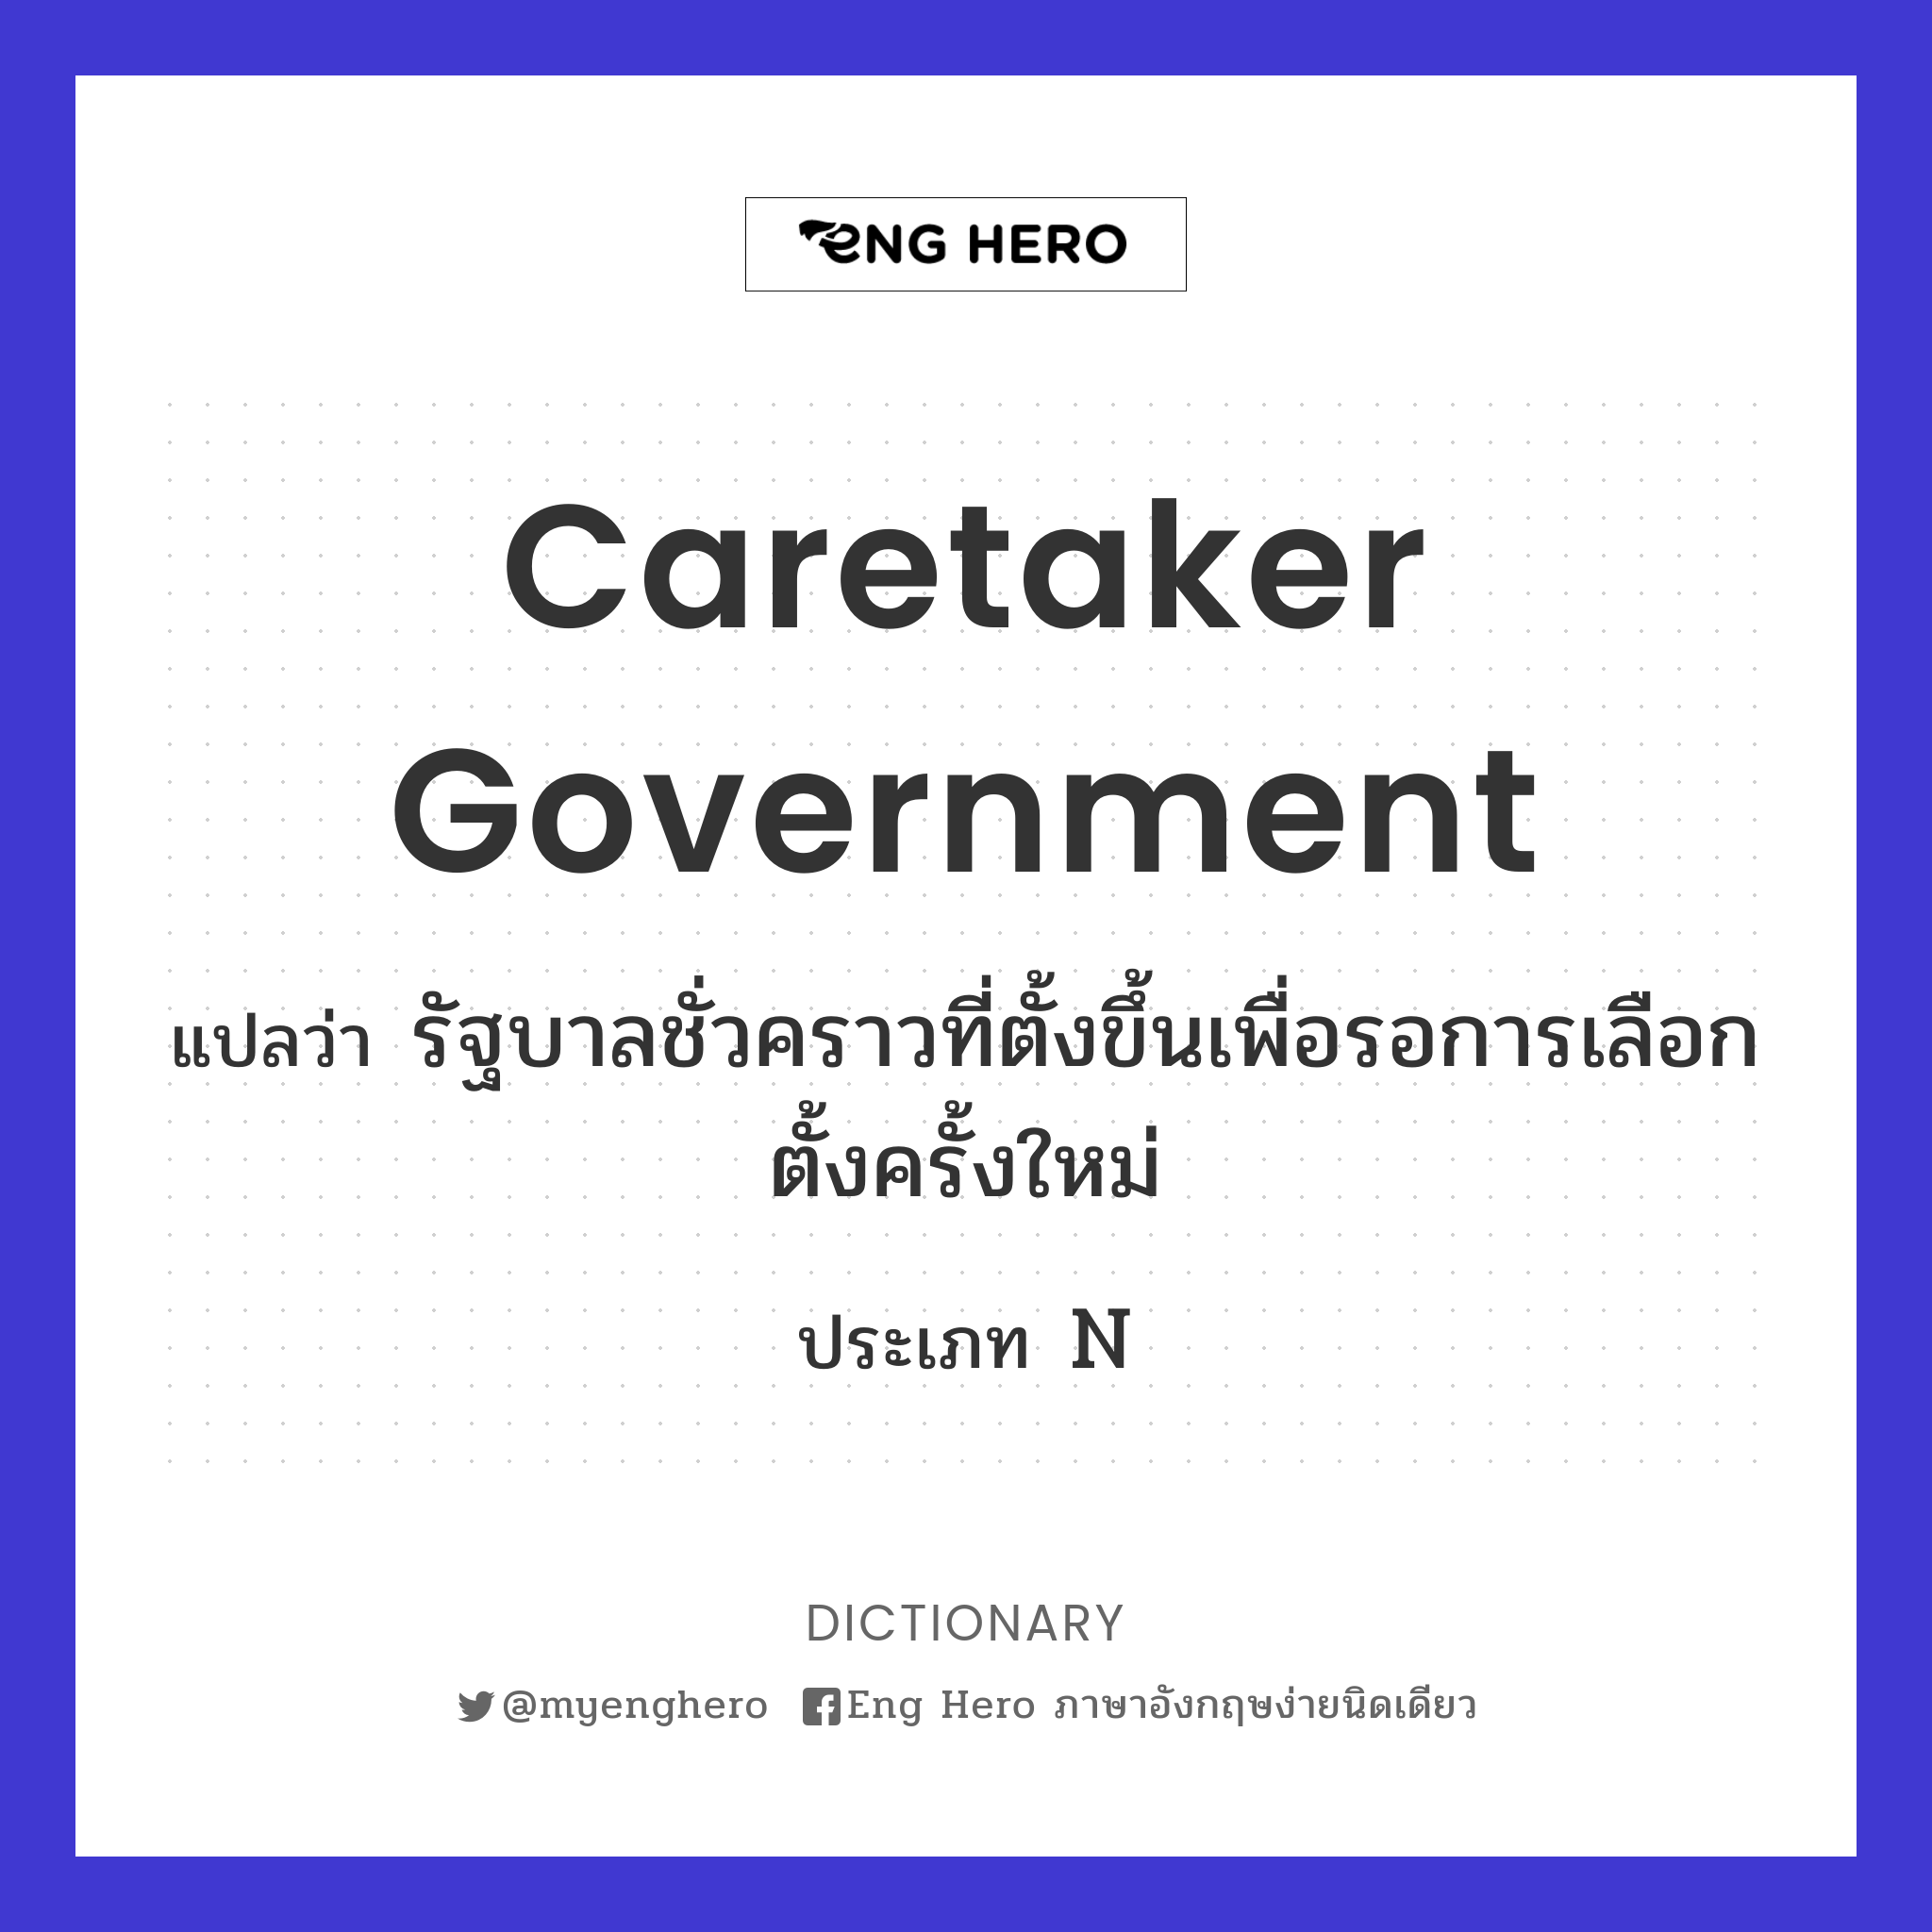 caretaker government